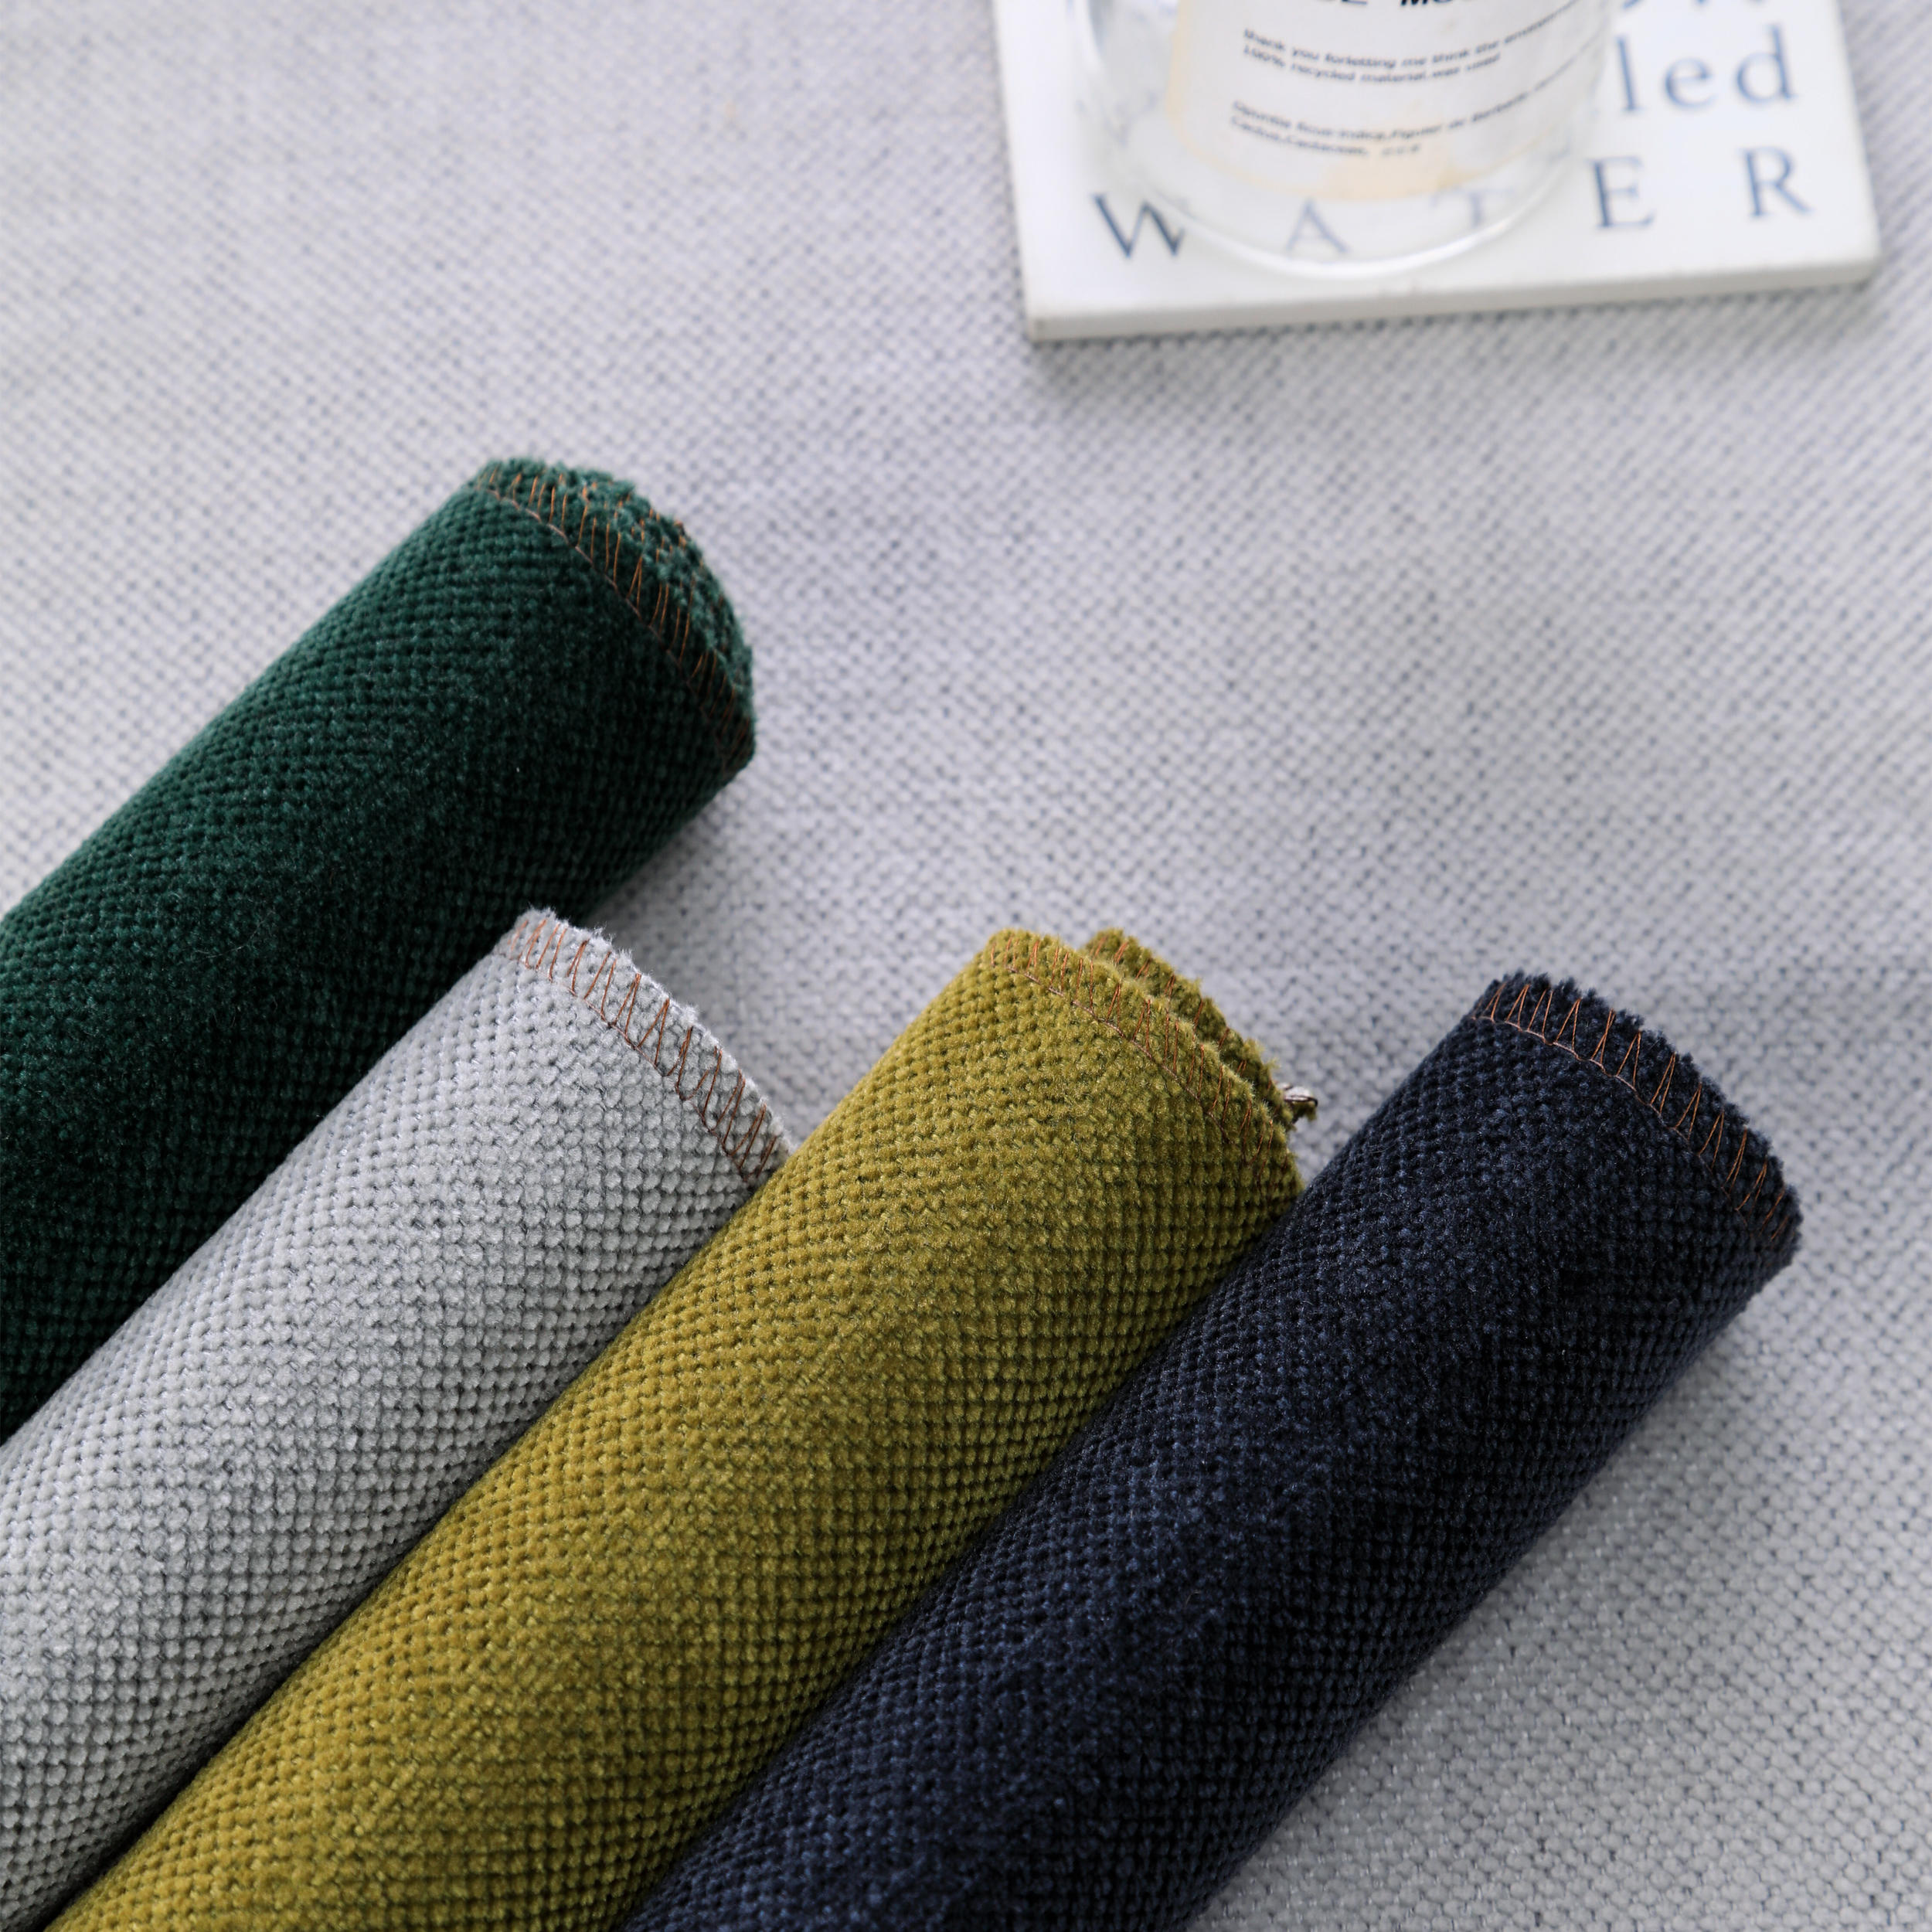 Plain weaved fabric for sofa linen look